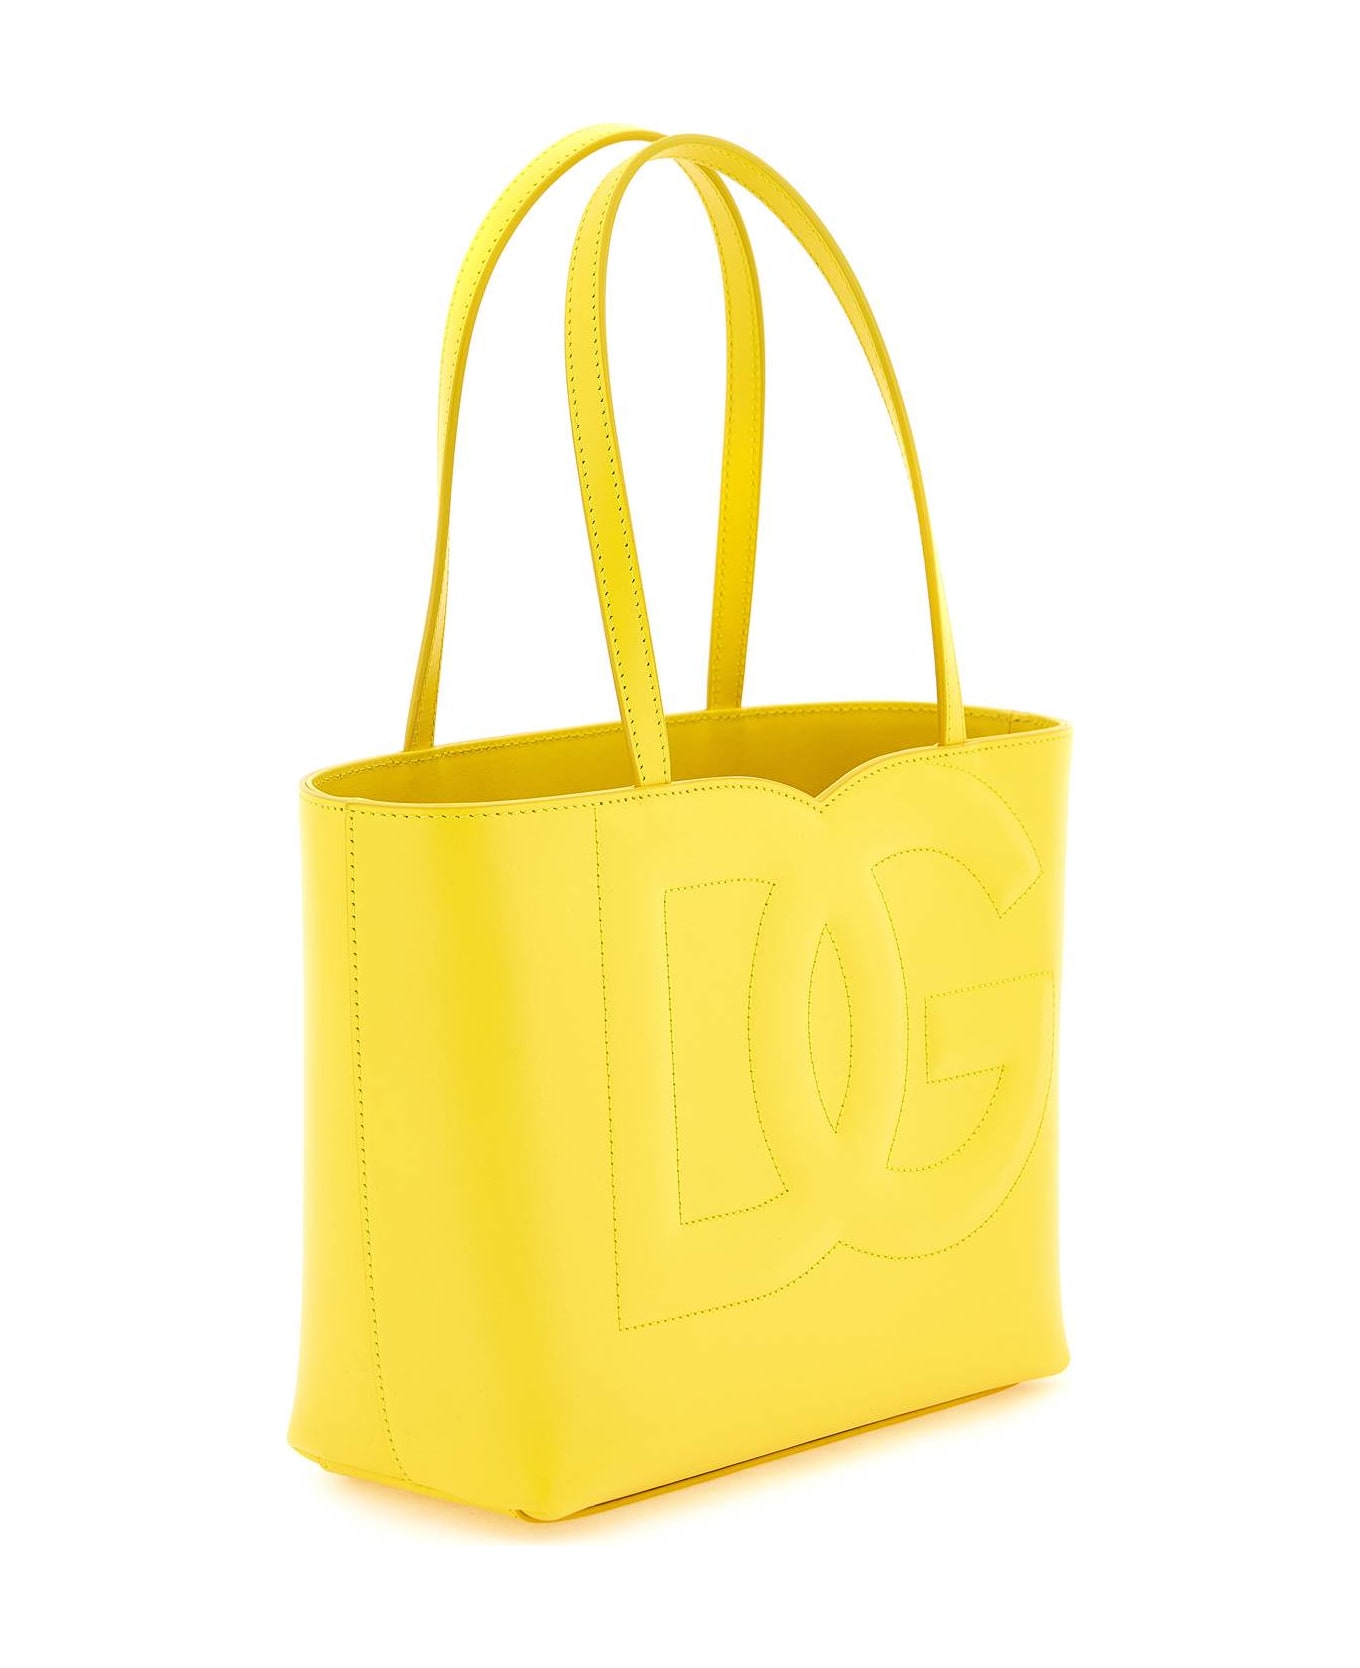 Dolce & Gabbana Logo Shopping Bag - YELLOW